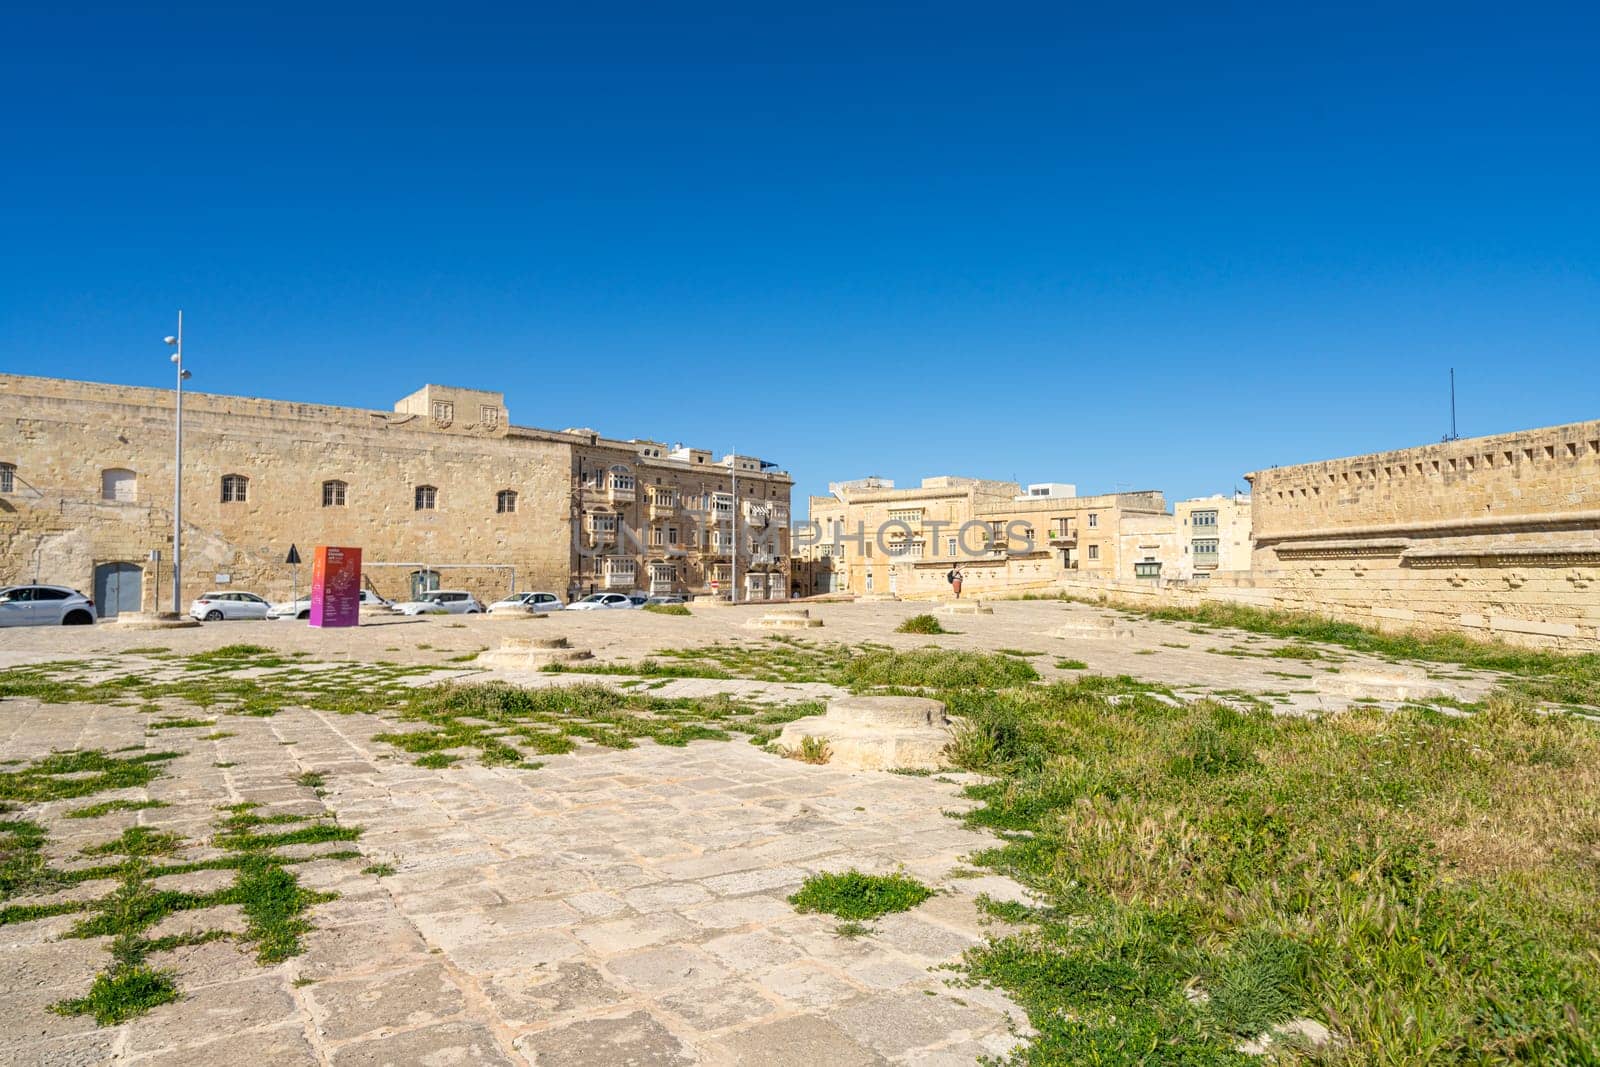  St. Elmo fort in Valletta, Malta by sergiodv